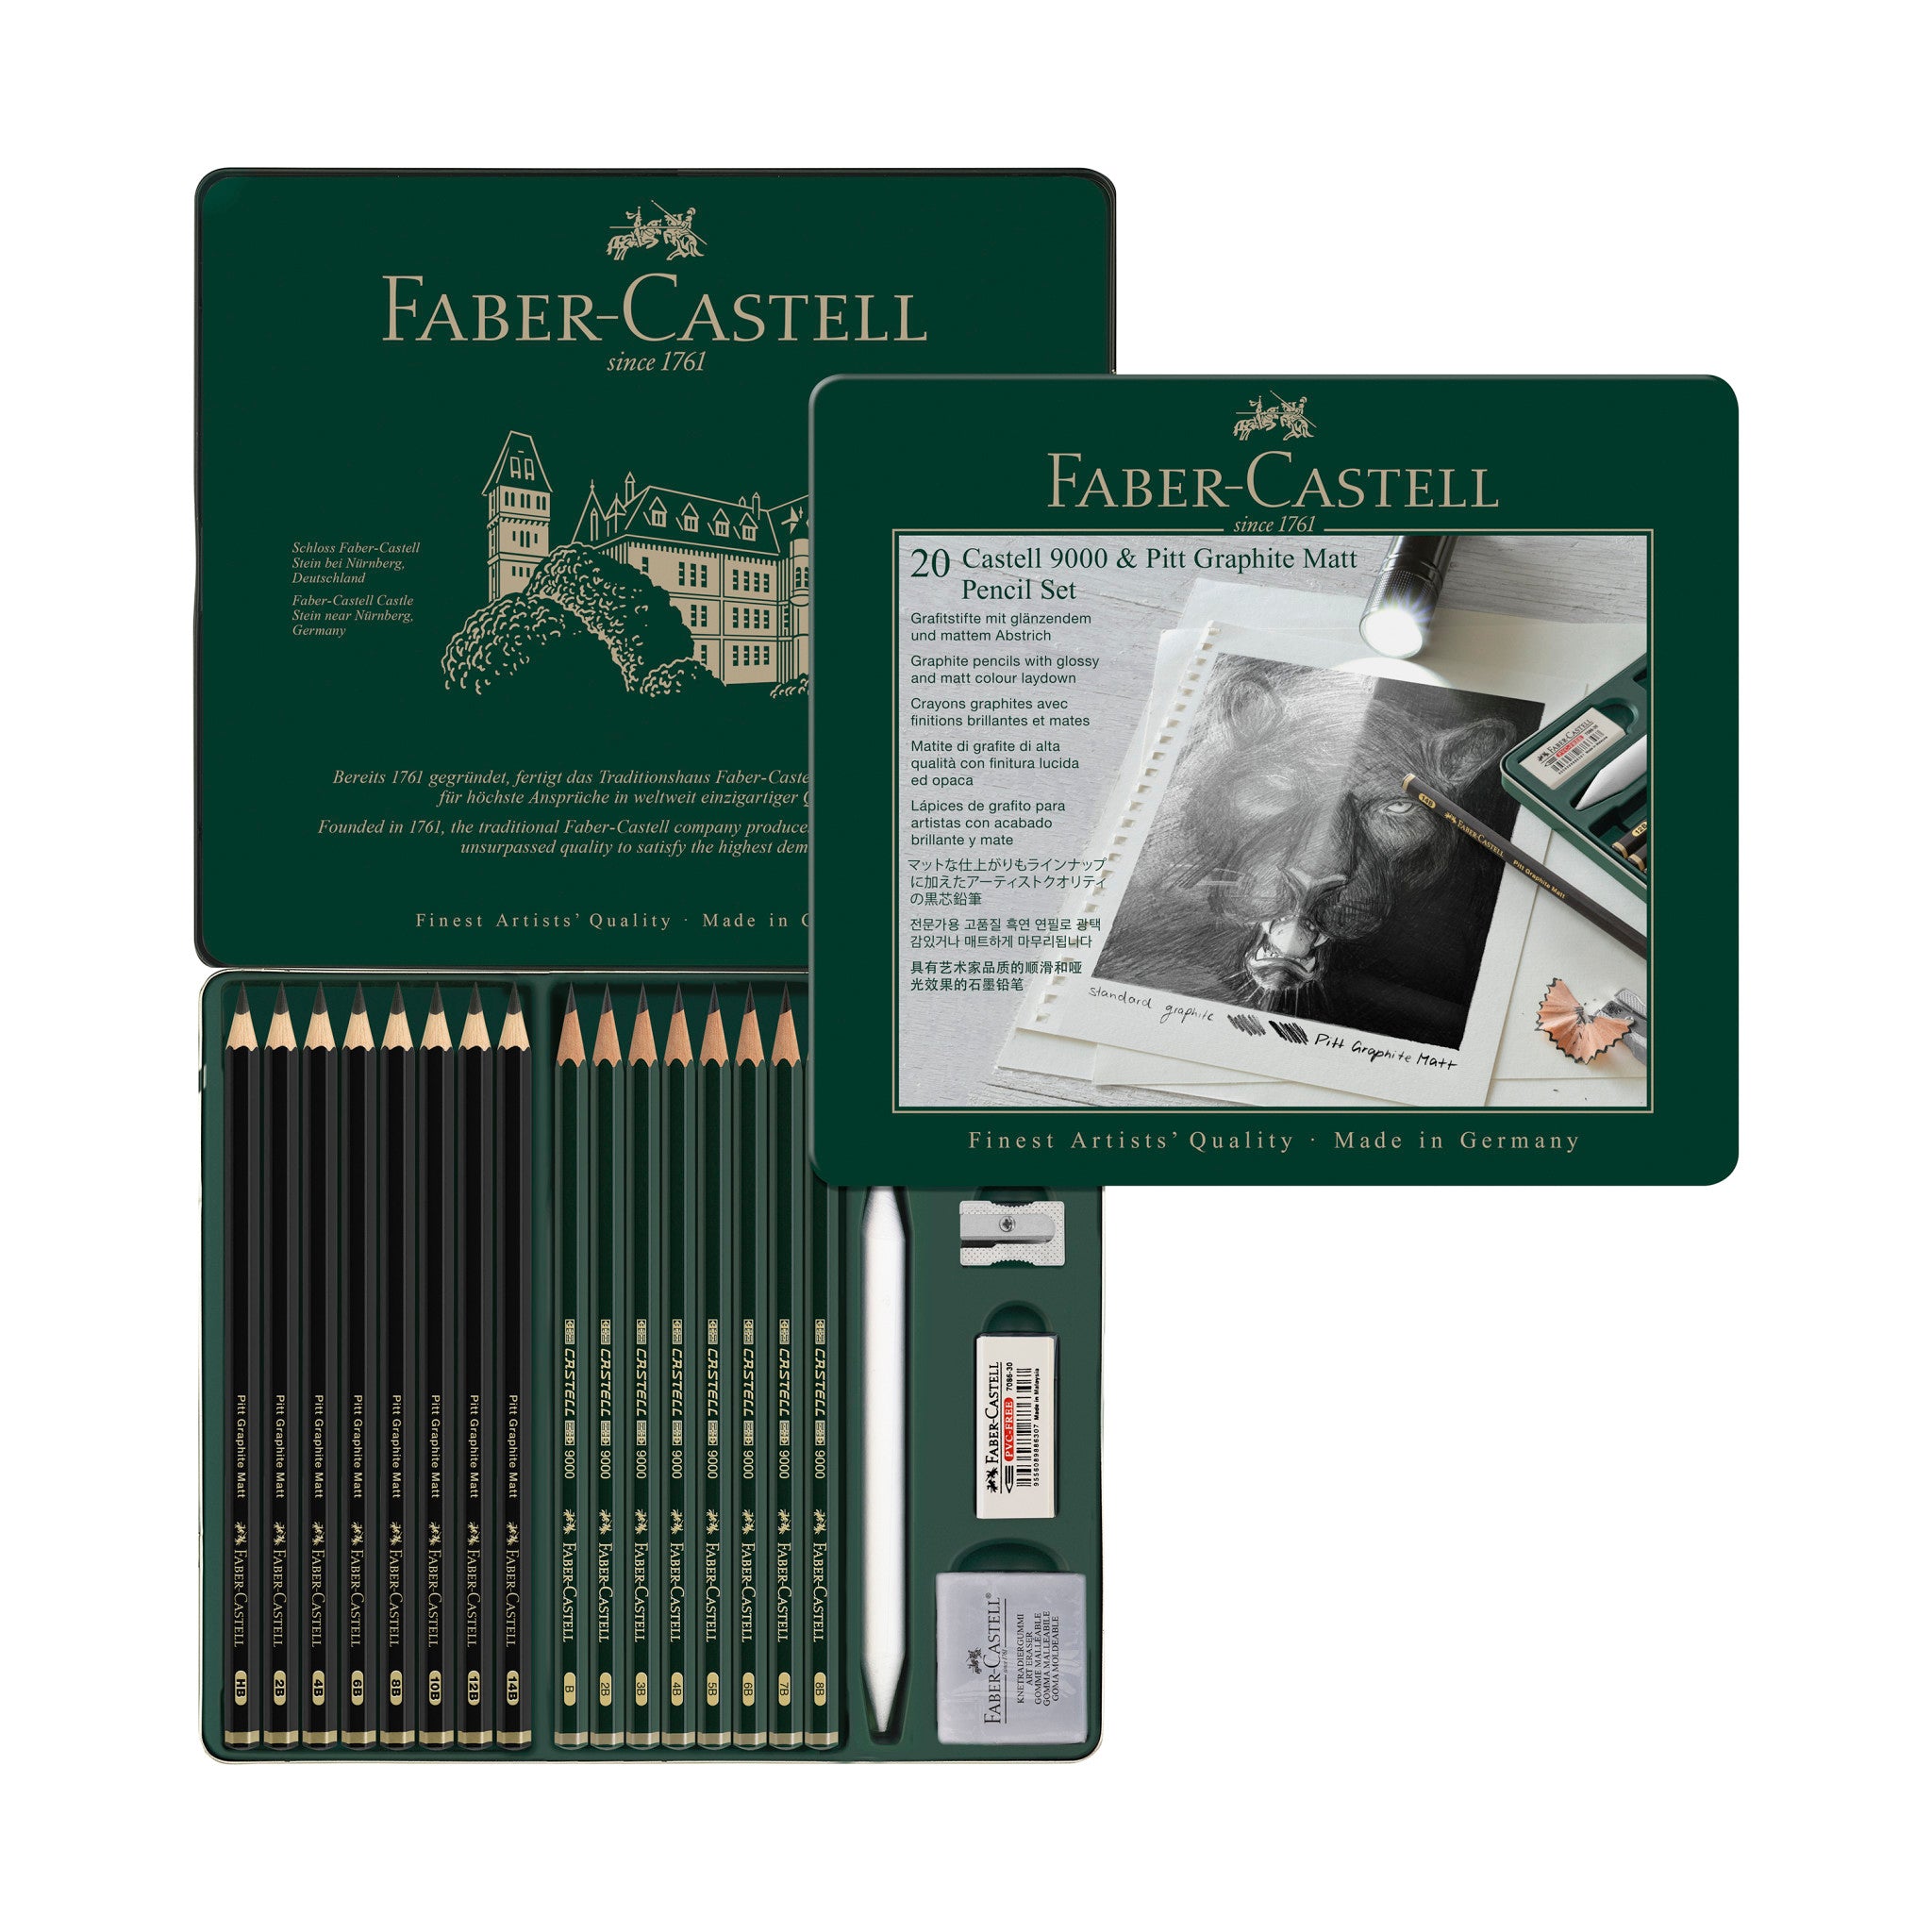 Faber-Castell 3 Count Pitt Graphite Matte Tin - 10B, 12B, 14B - Matte Black  Graphite Pencils